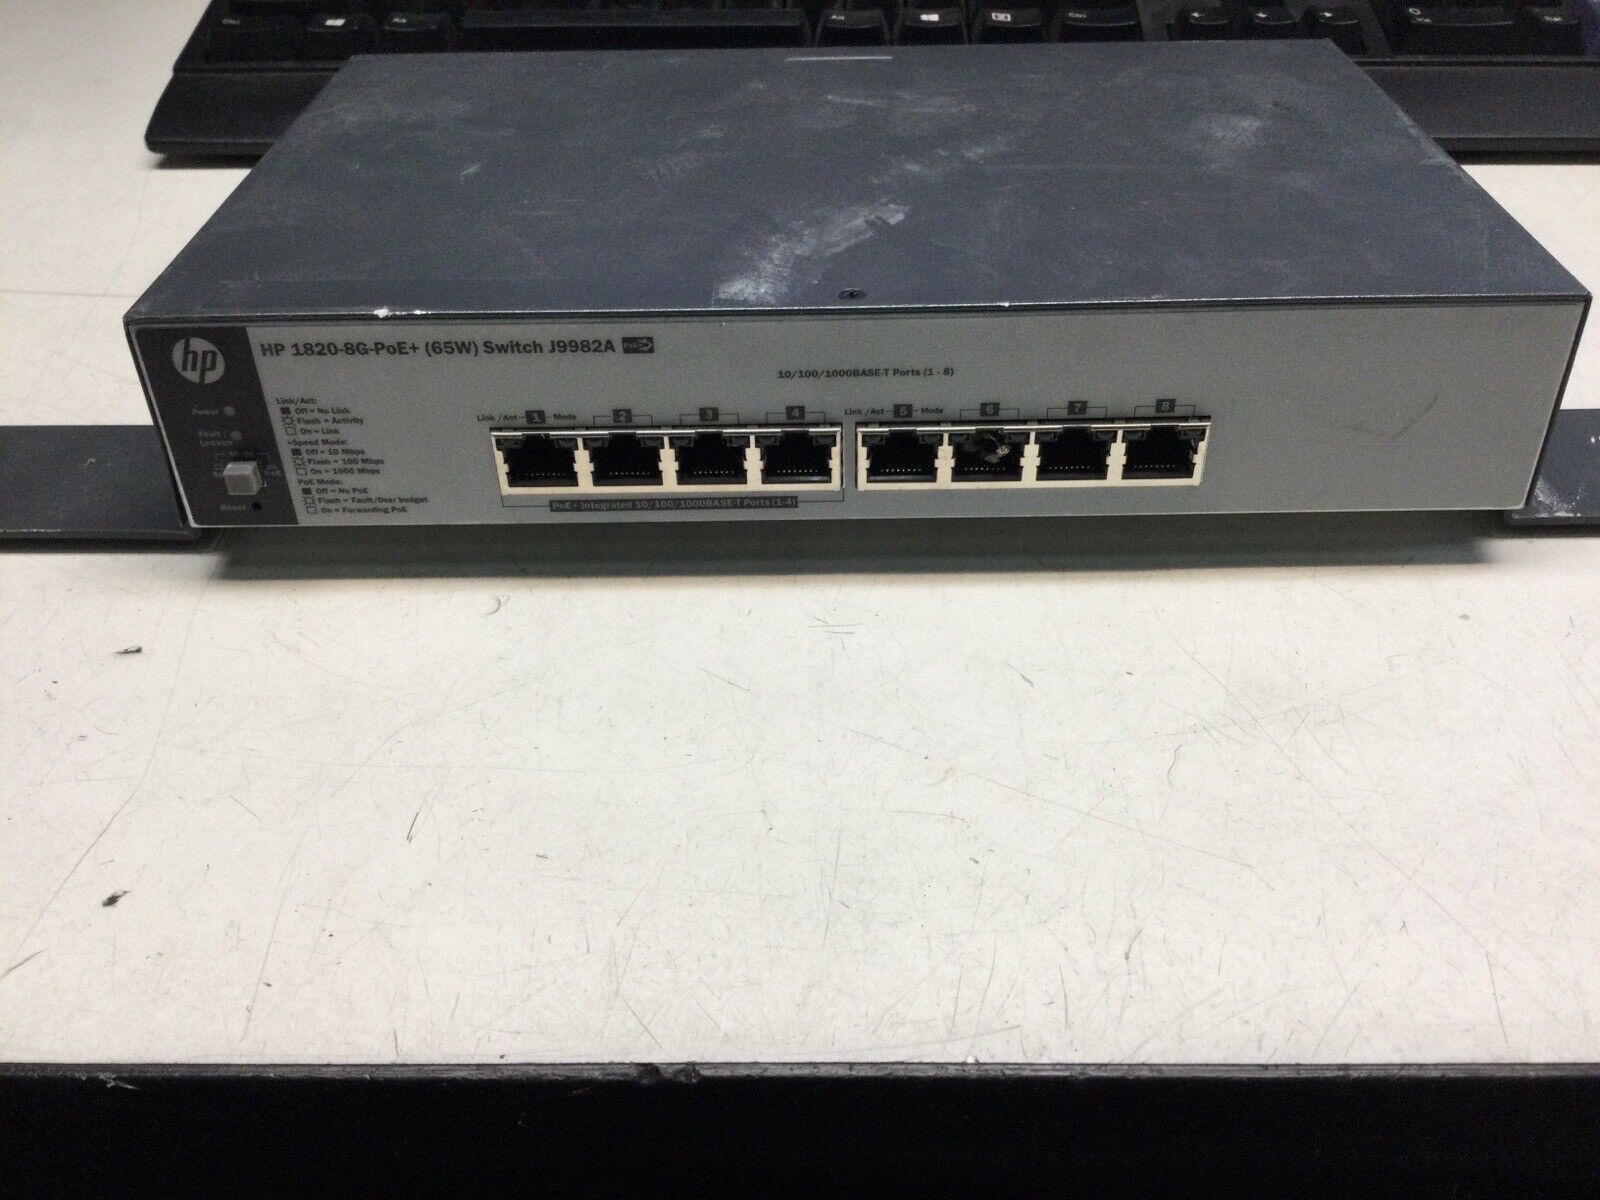 HP 1820-8G-PoE+ Managaed Switch (J9982A)